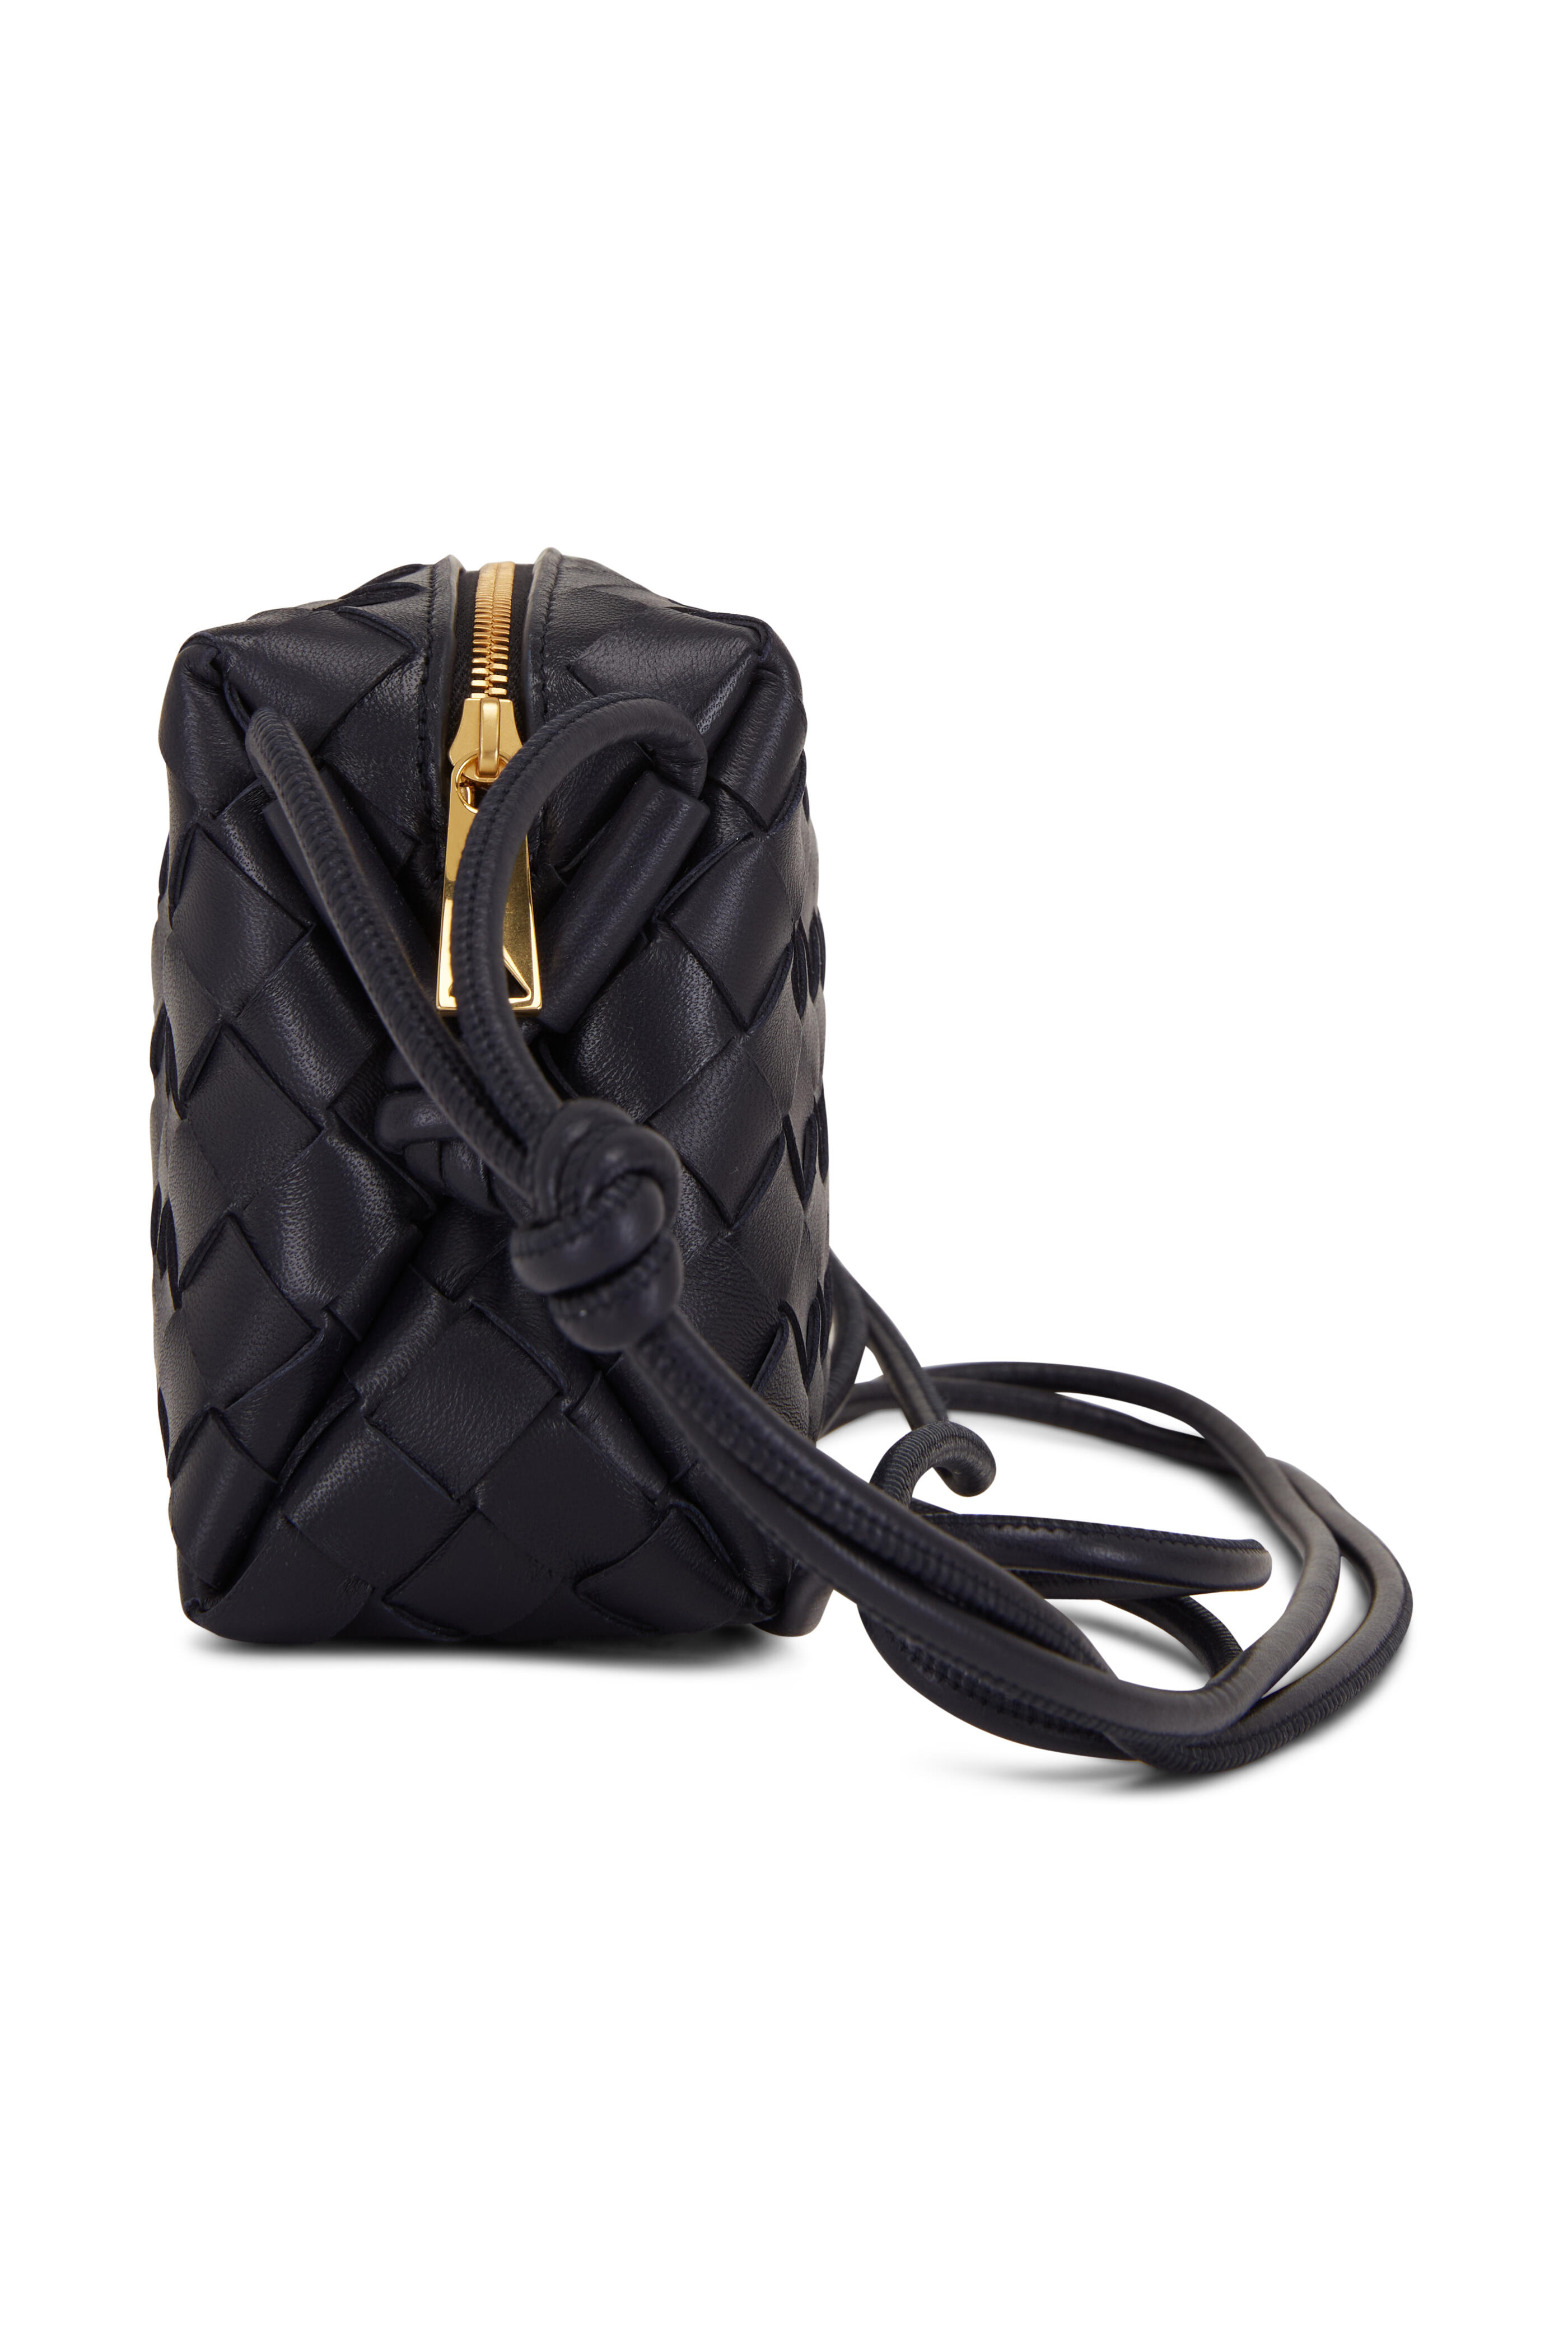 Bottega Veneta Men's Intrecciato Leather Crossbody Camera Bag